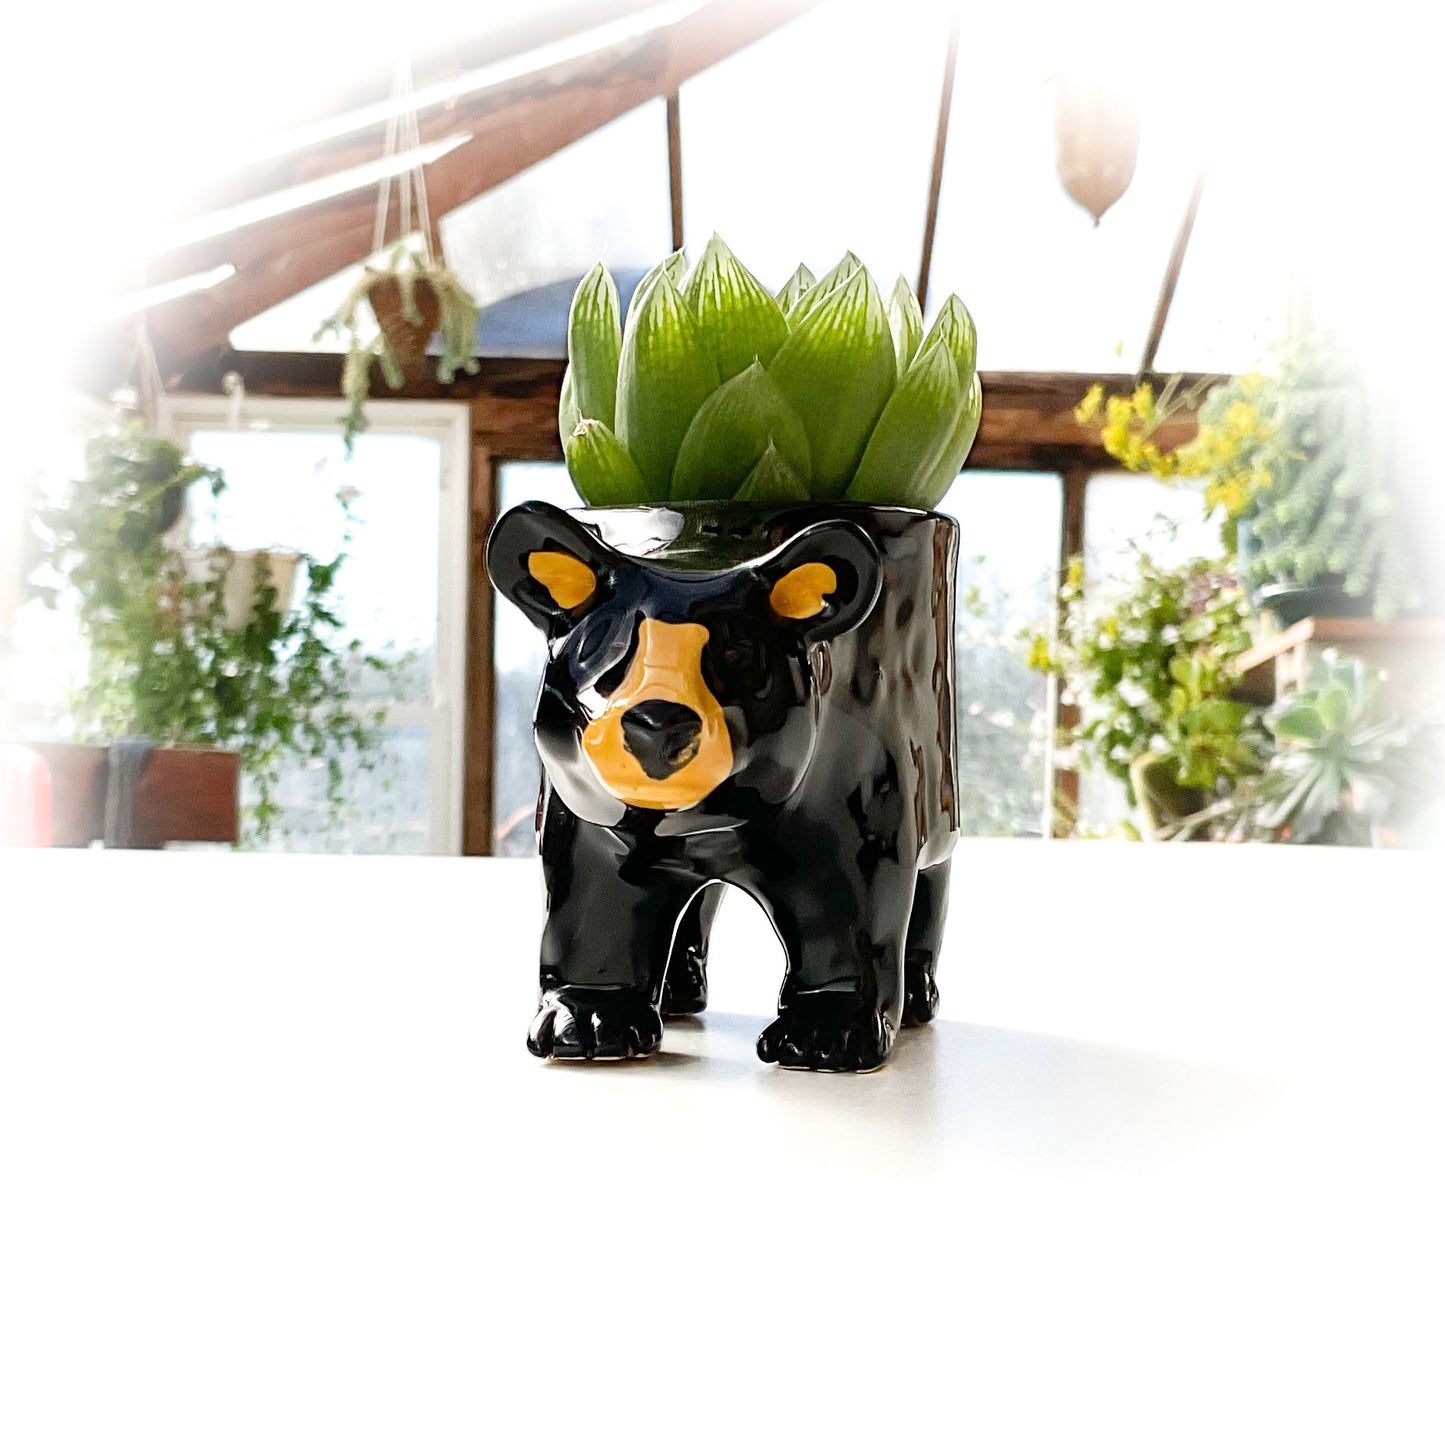 Black Bear Pot - Ceramic Bear Planter